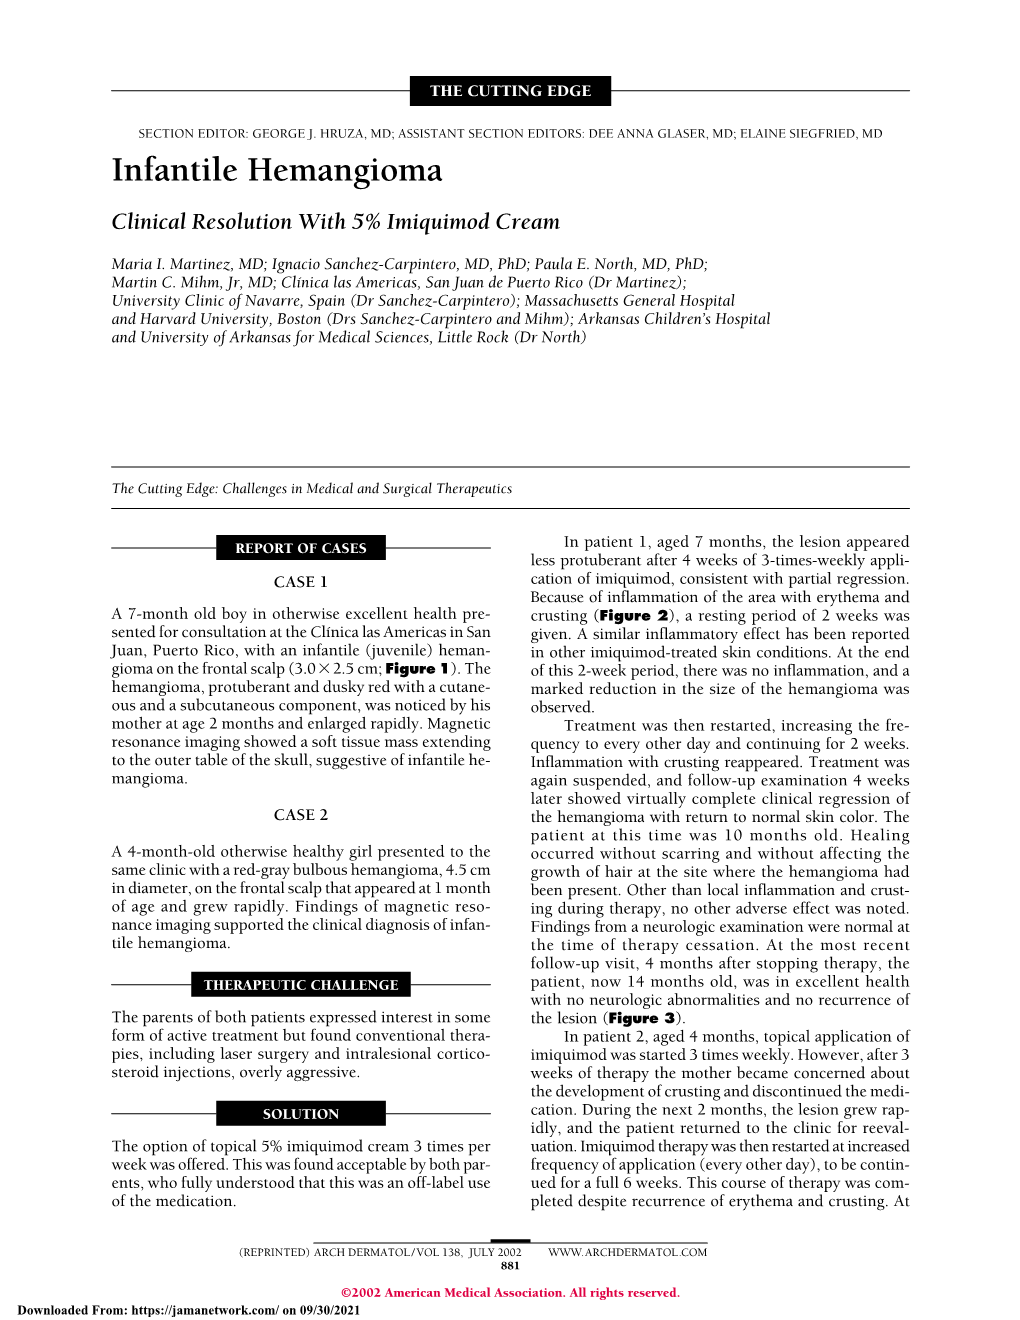 Infantile Hemangioma Clinical Resolution with 5% Imiquimod Cream